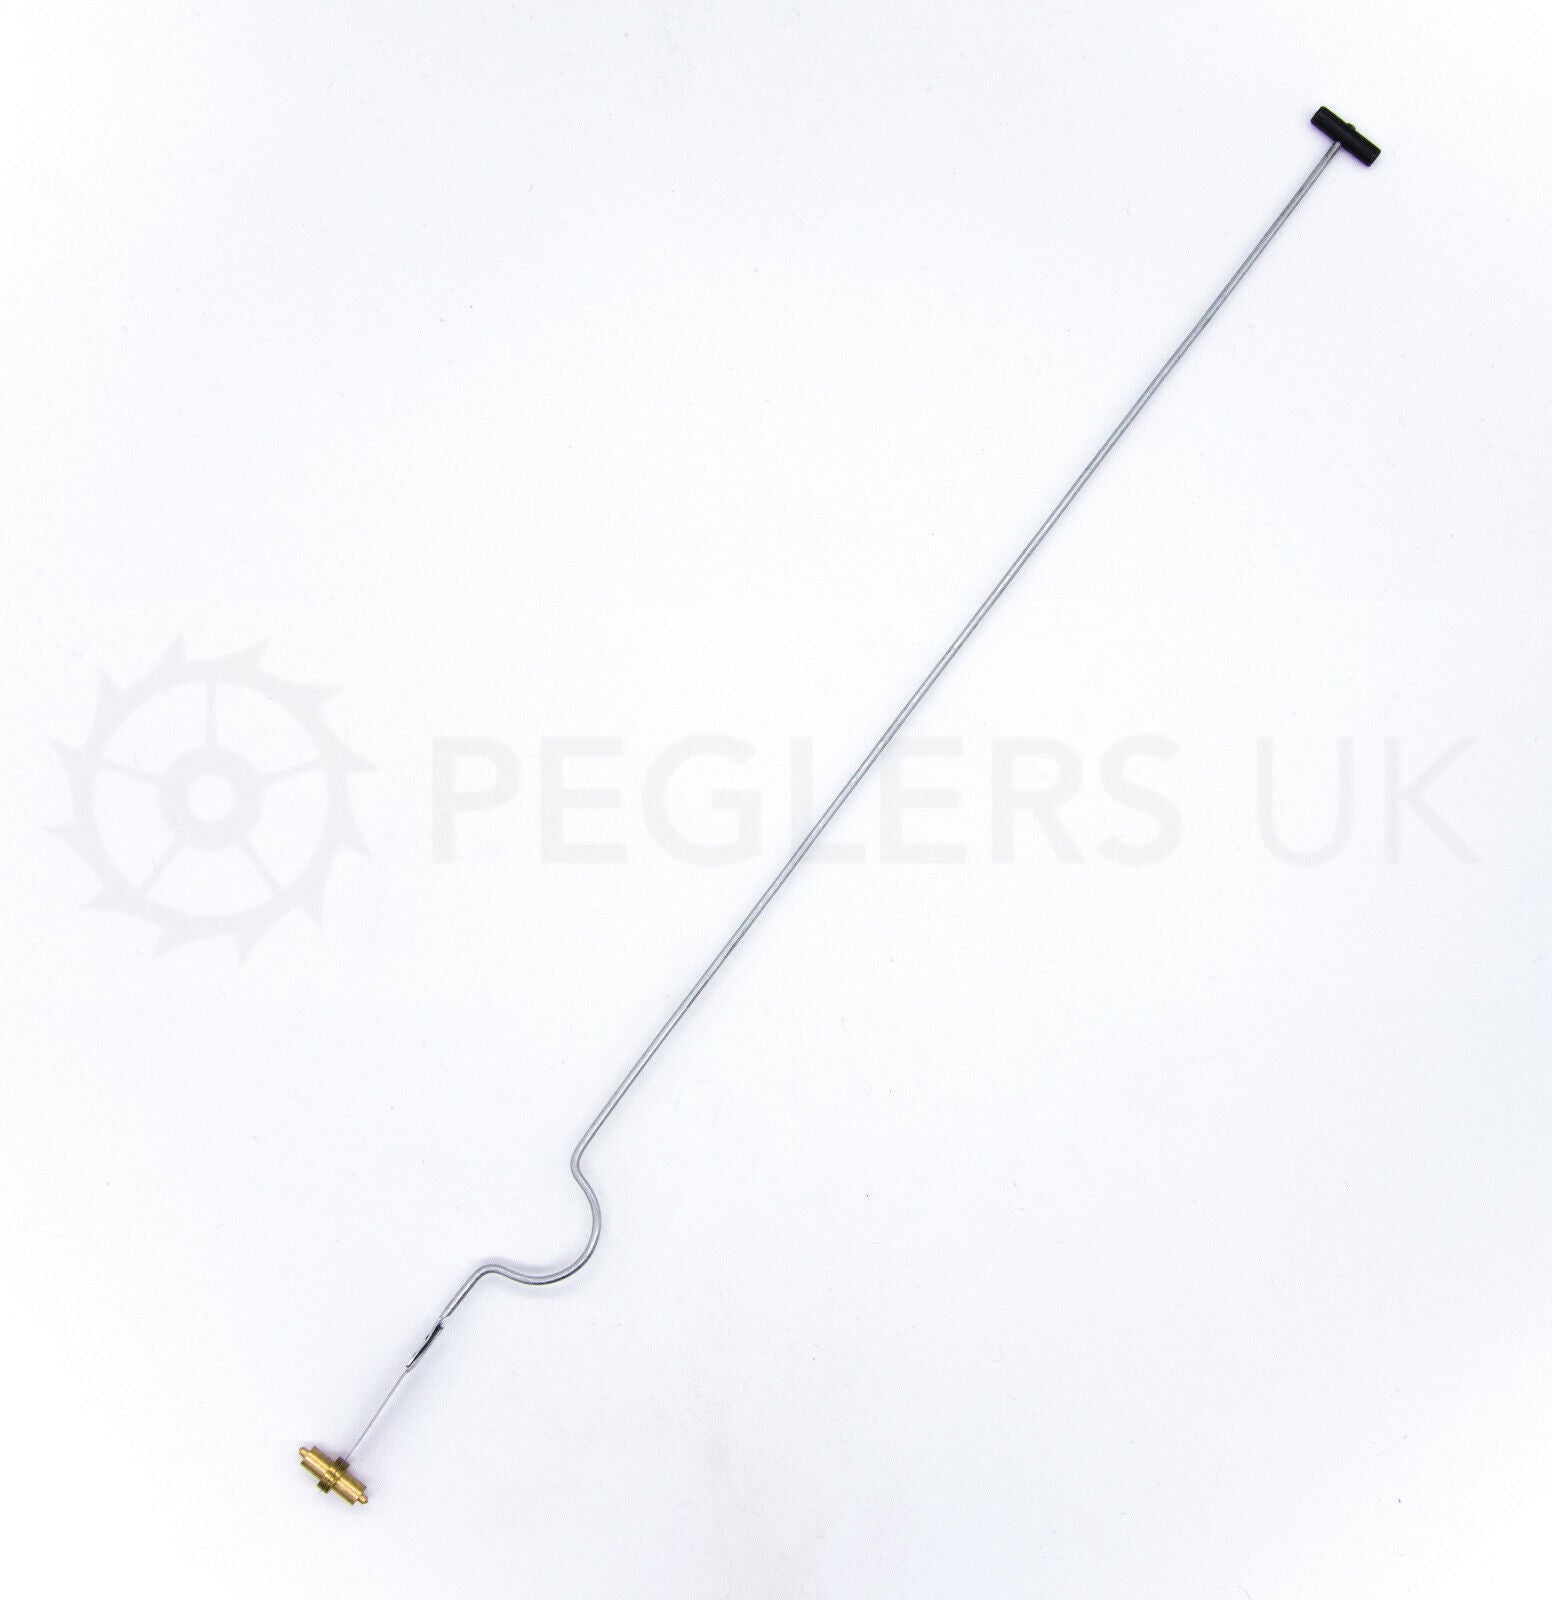 Pendulum Rod Leader and Suspension Spring - Curved